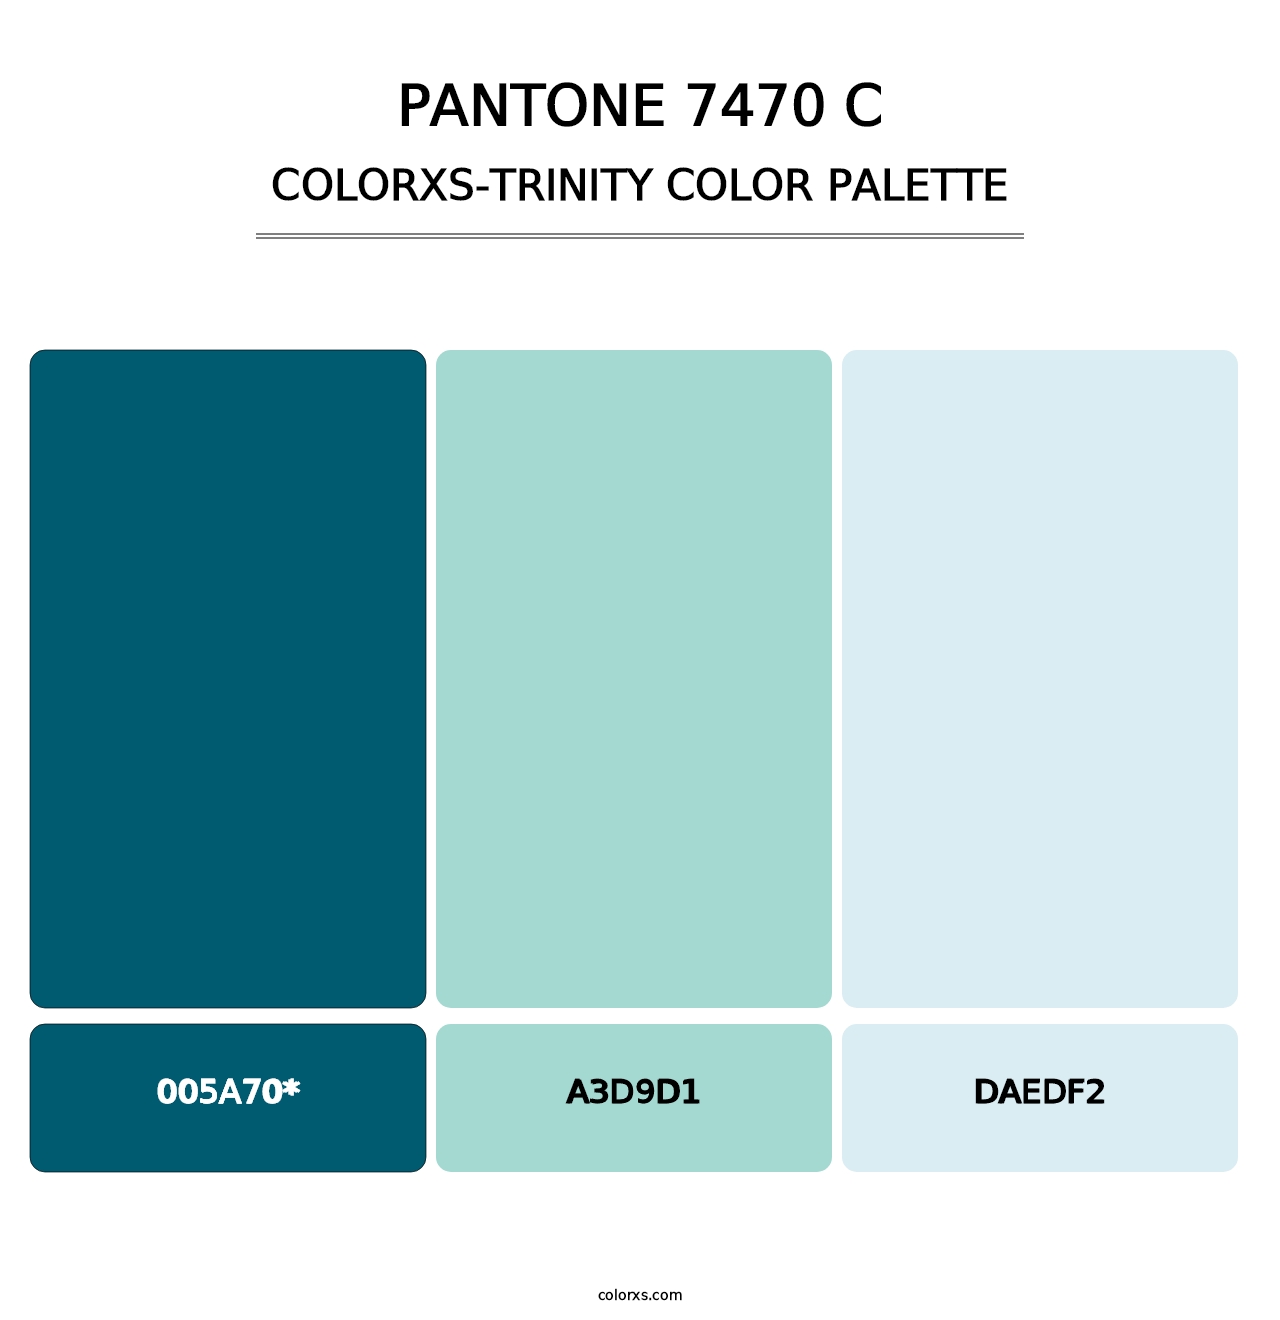 PANTONE 7470 C - Colorxs Trinity Palette